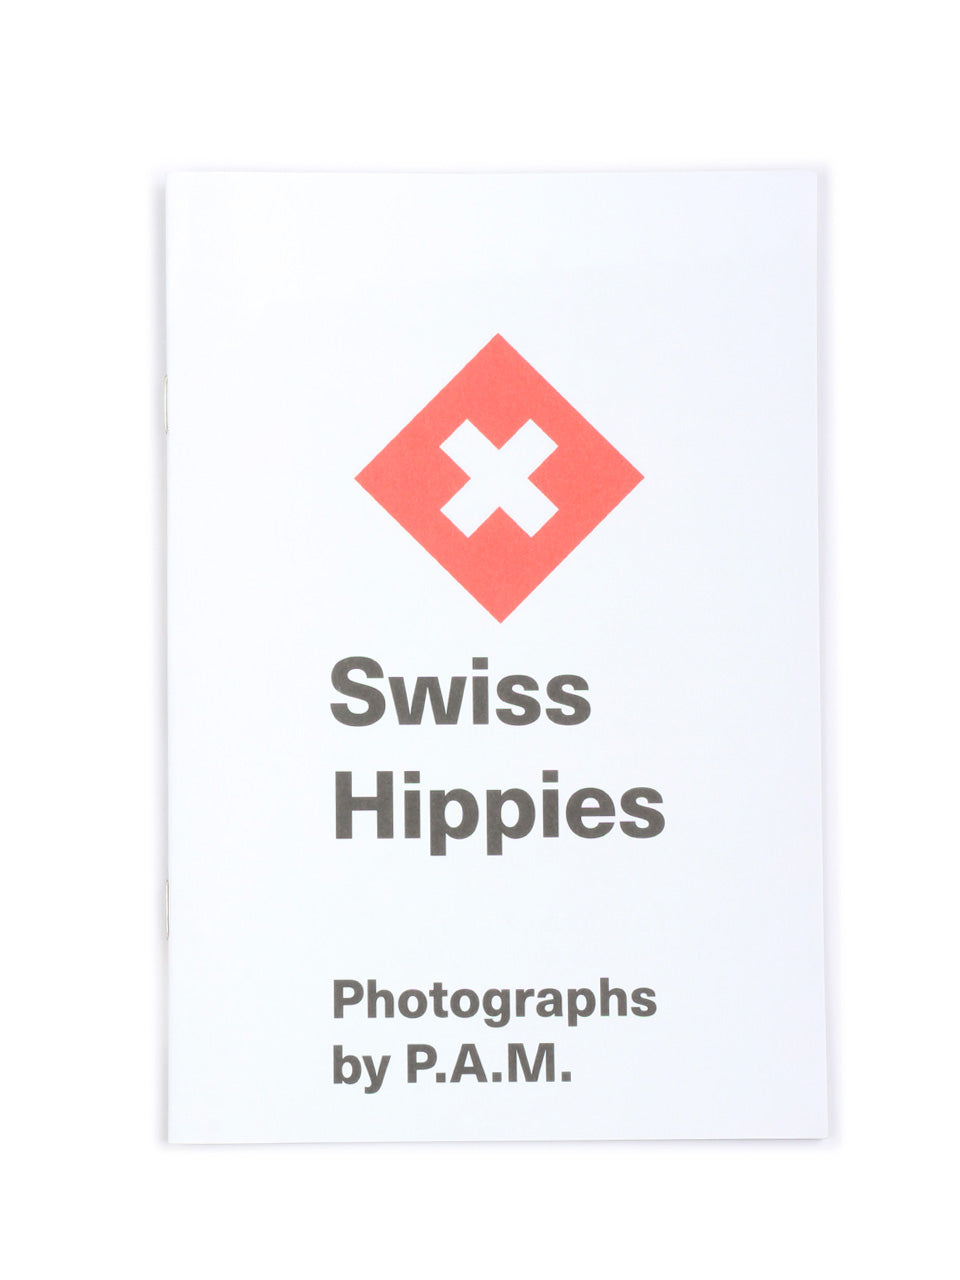 P.A.M./Swiss hippies